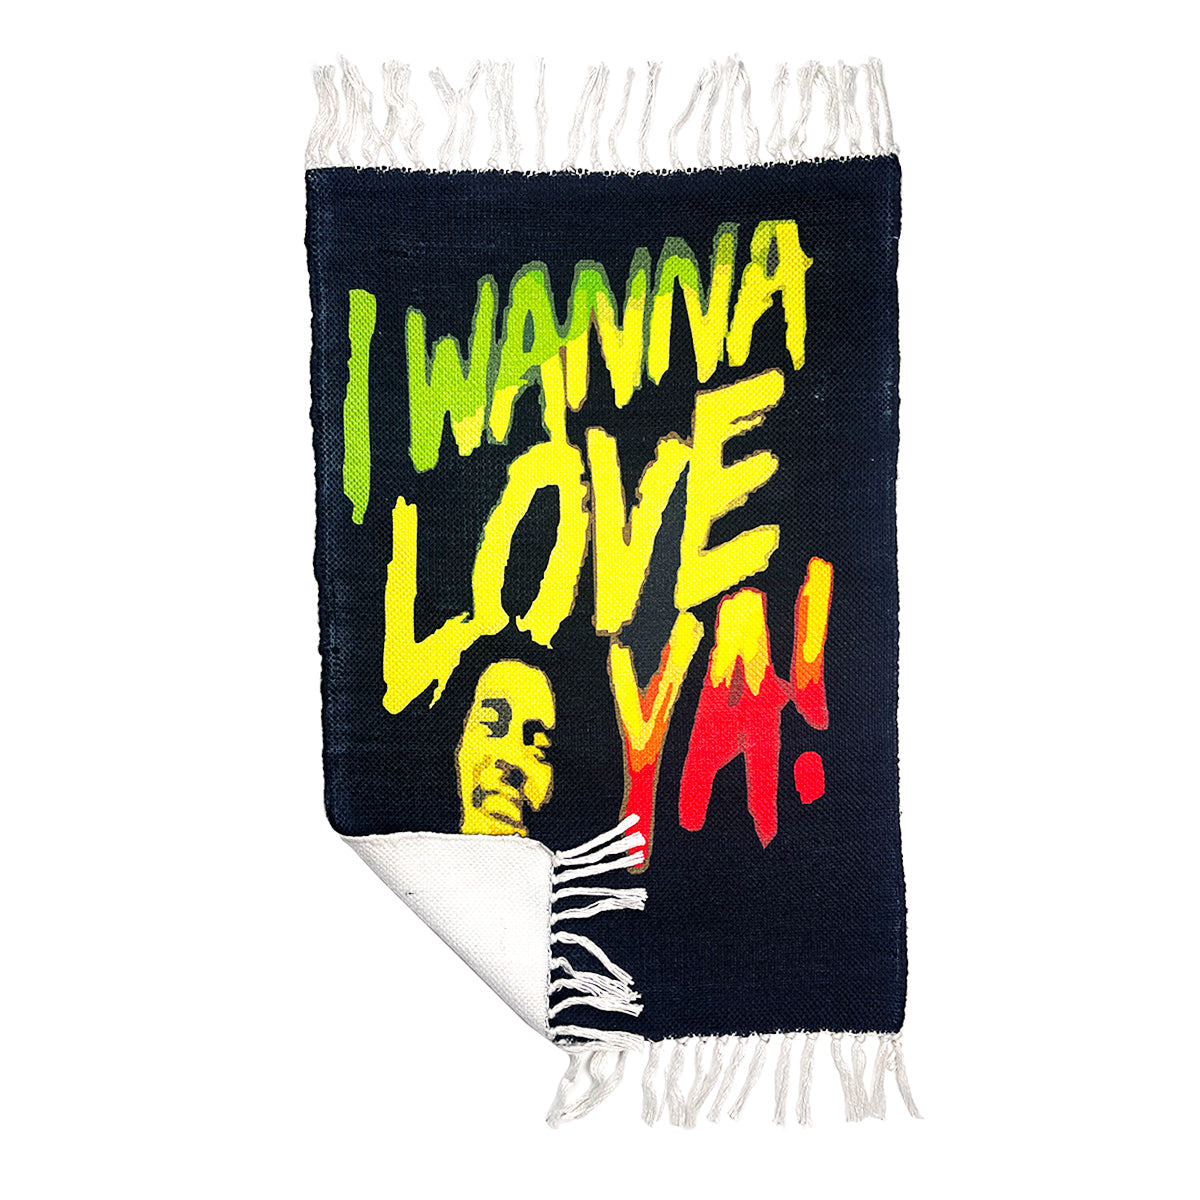 Handloom Printed I Wanna Love Ya! Design Doormat Size 2ft x 3ft